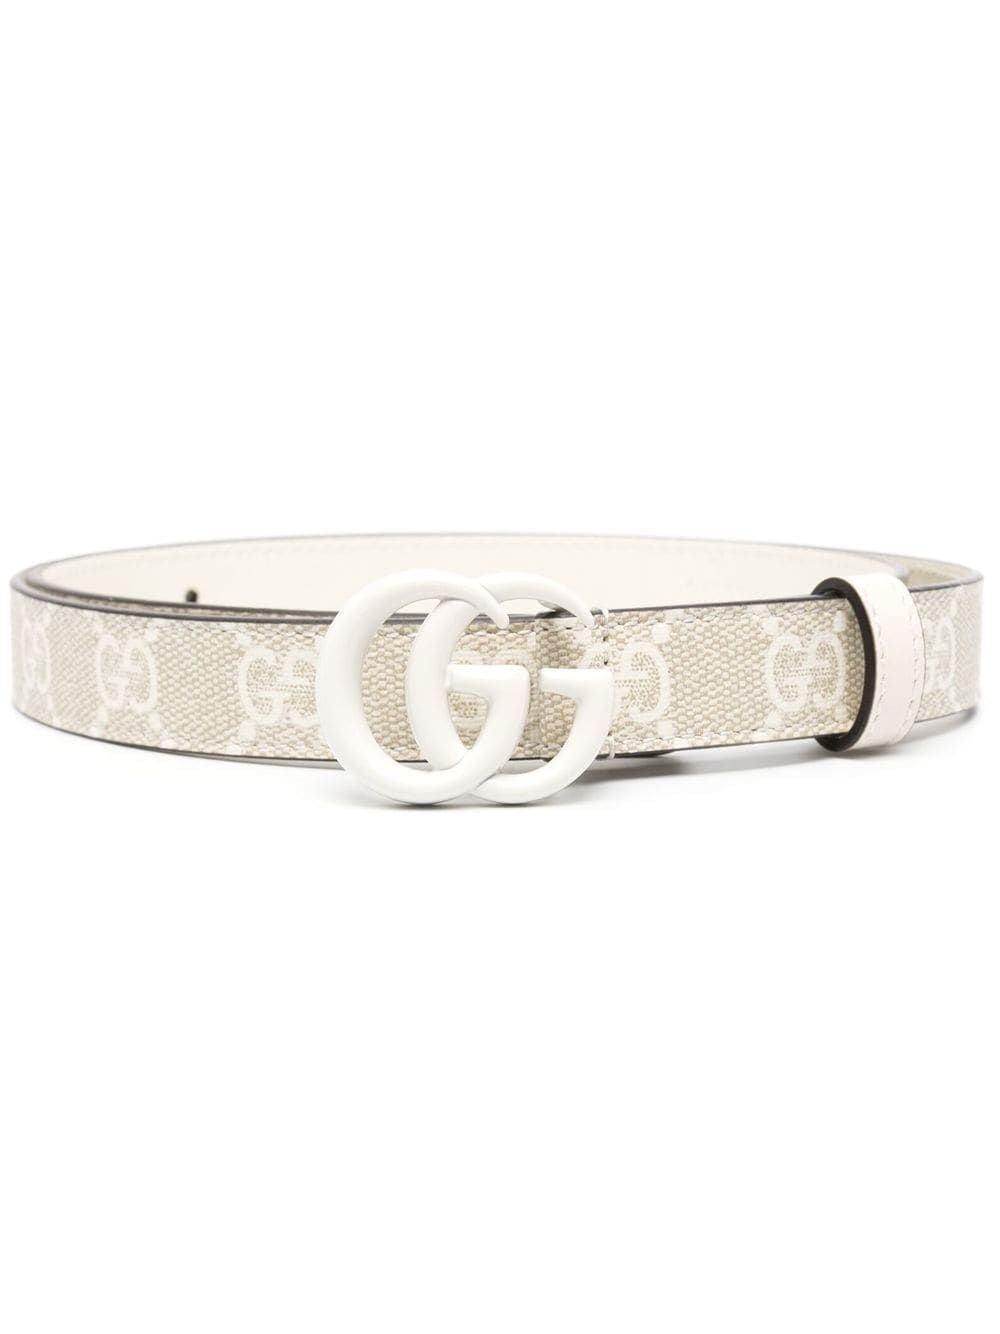 GG Marmont reversible thin belt